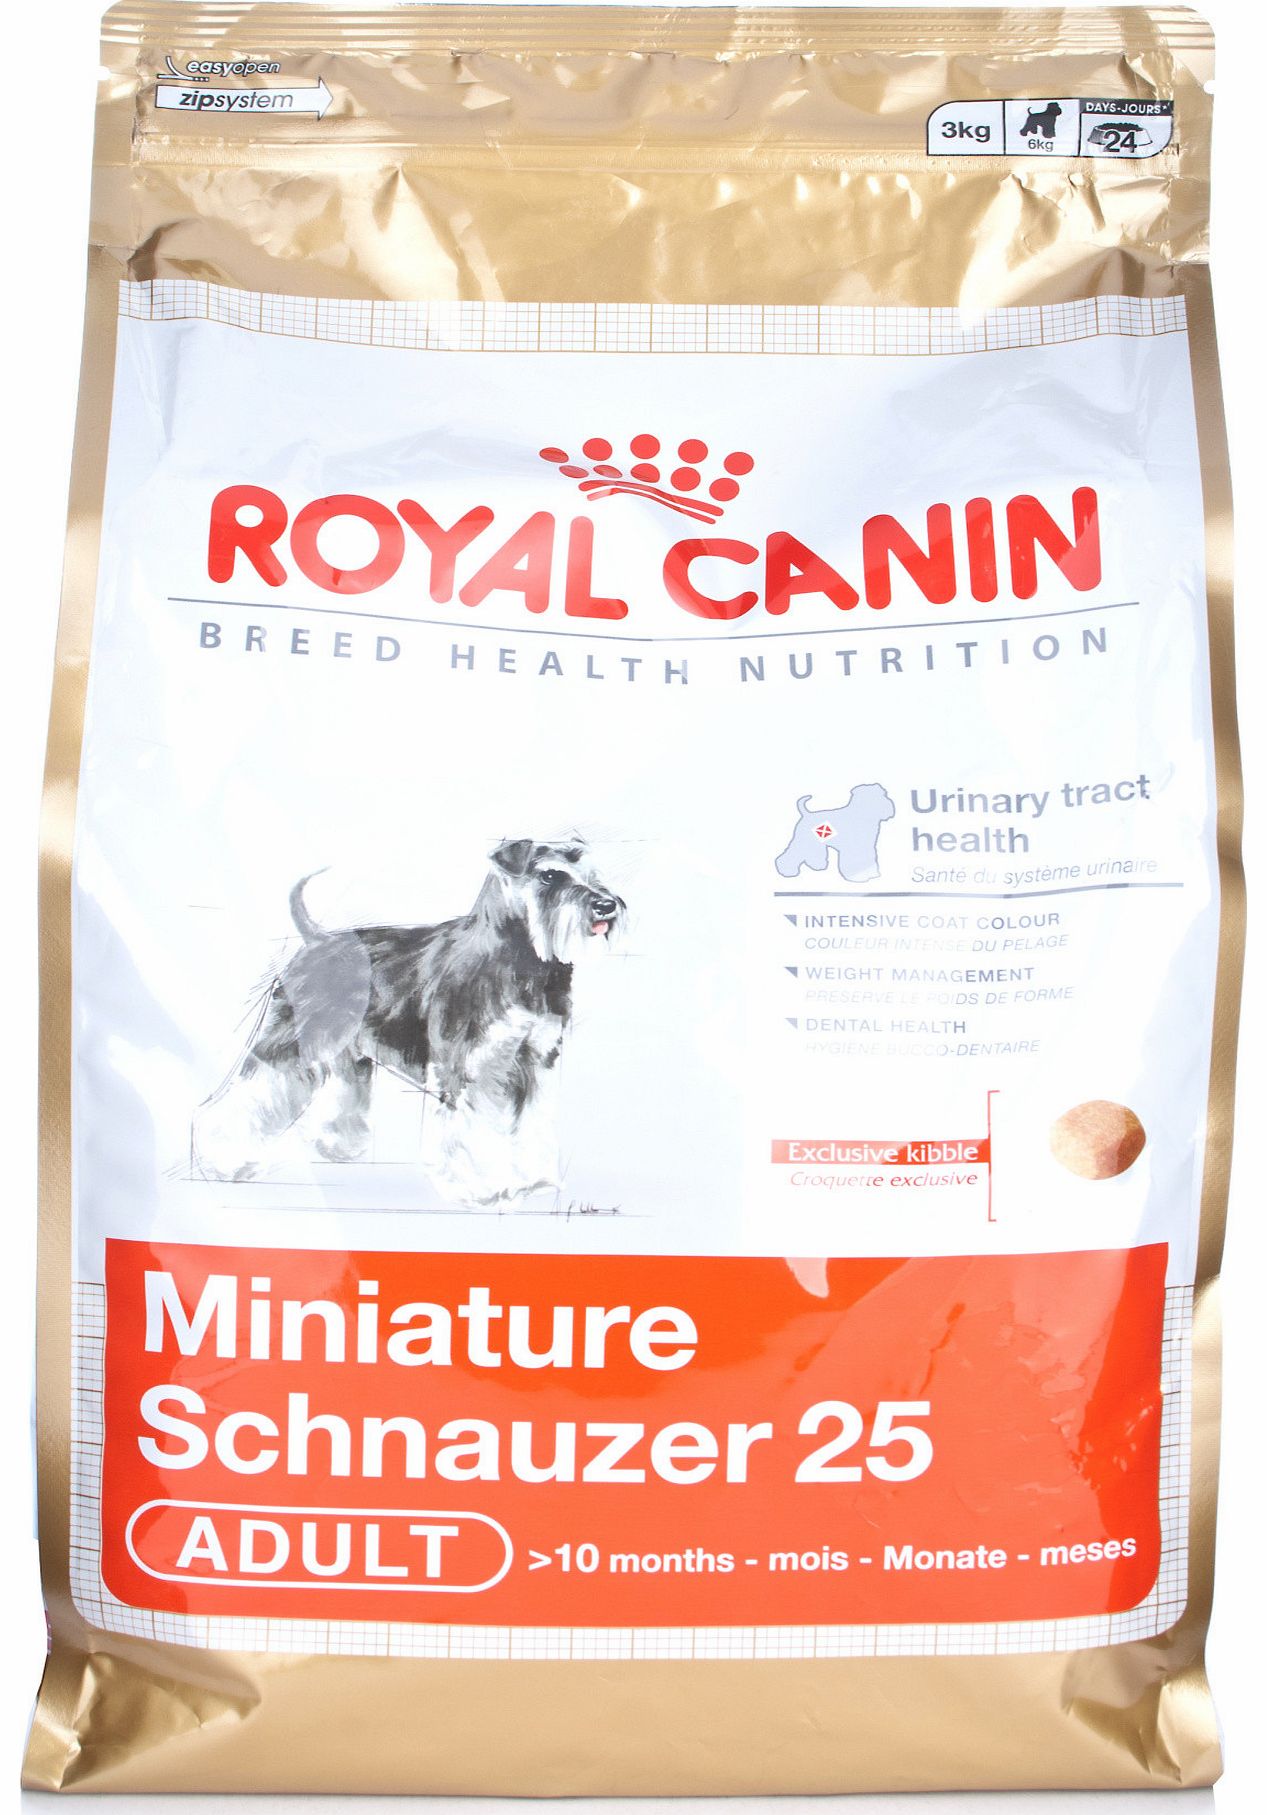 Royal Canin Breed Health Nutrition Miniature